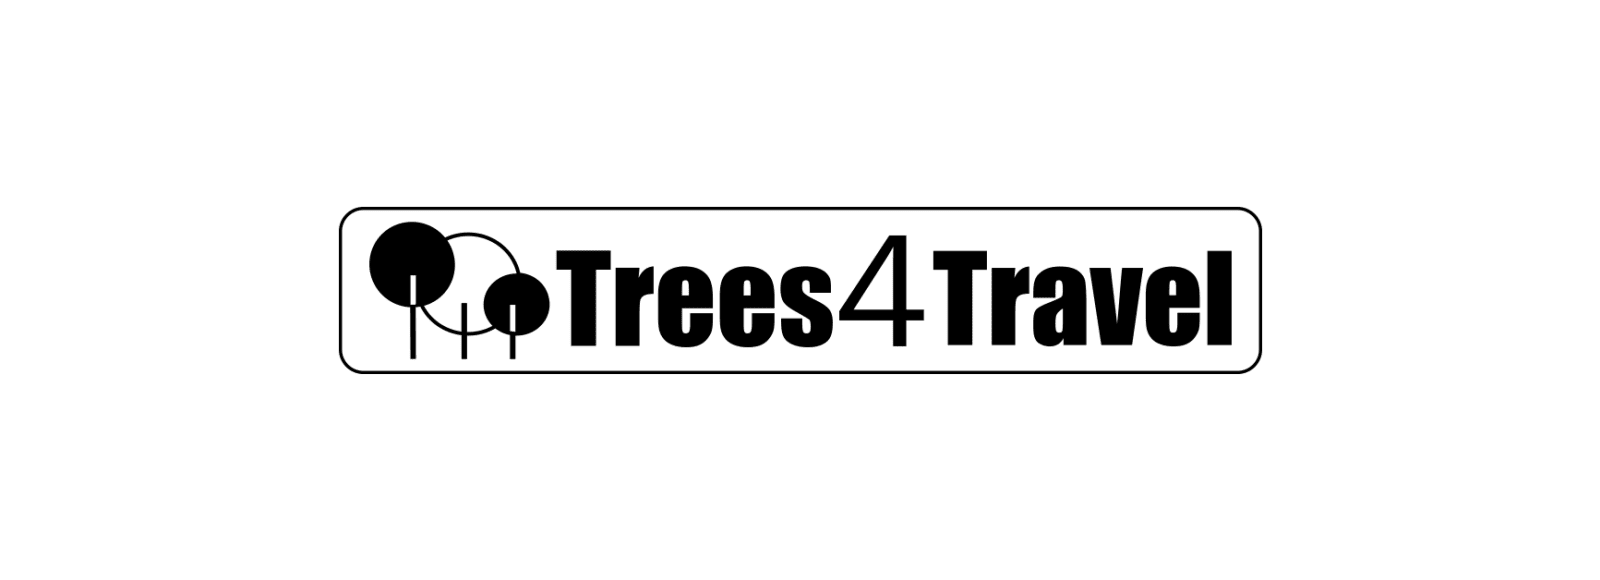 Trees 4 Travel logo